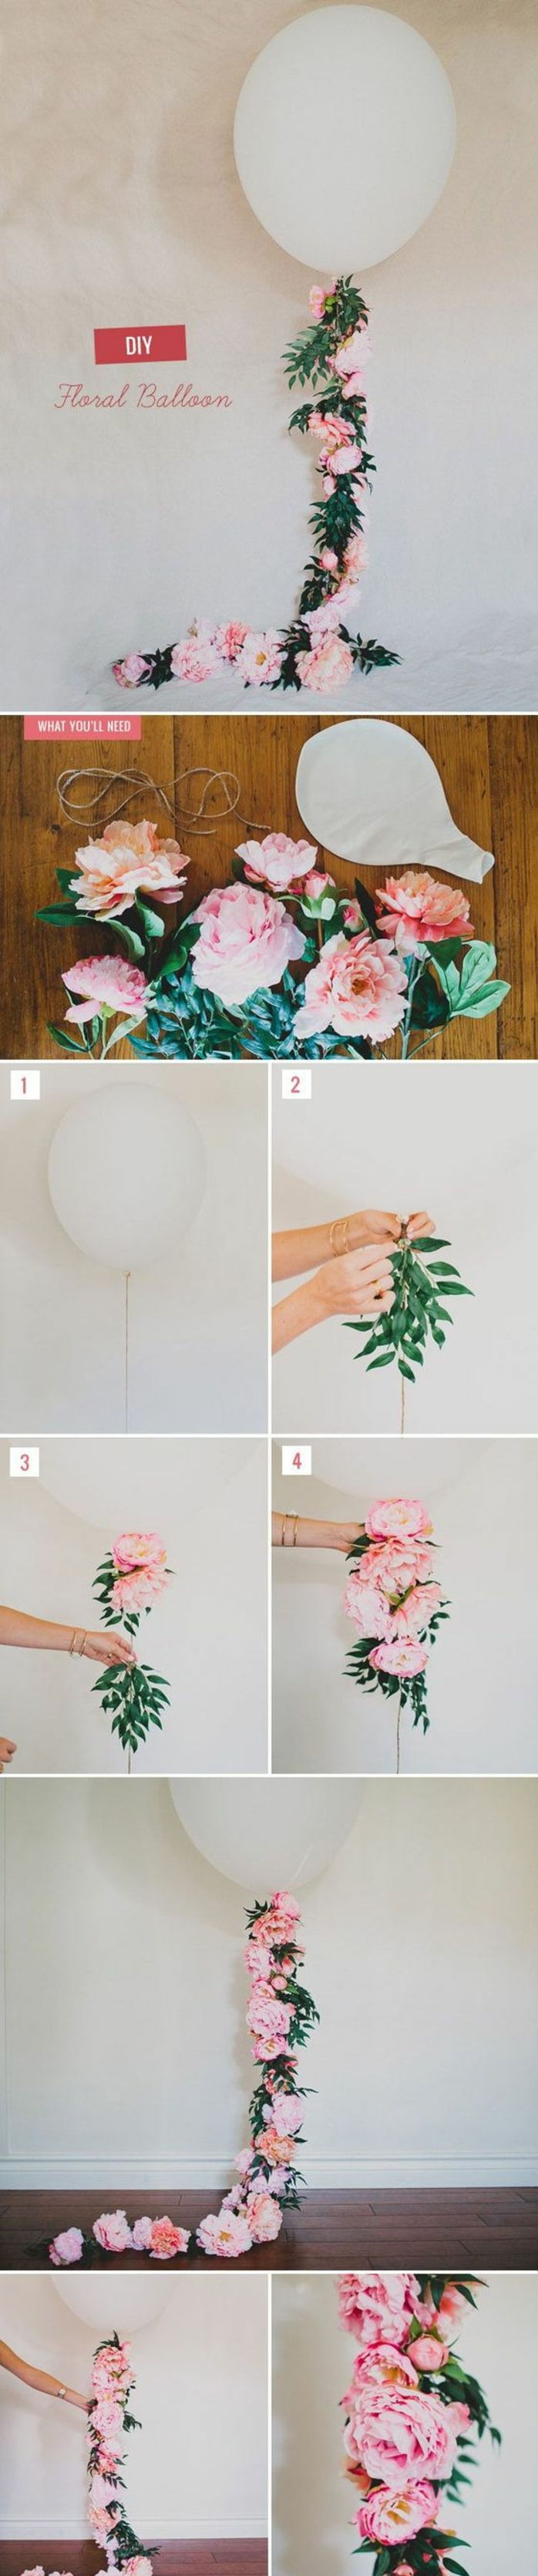 idee artigianali primavera, palloncino bianco, fiori, rami